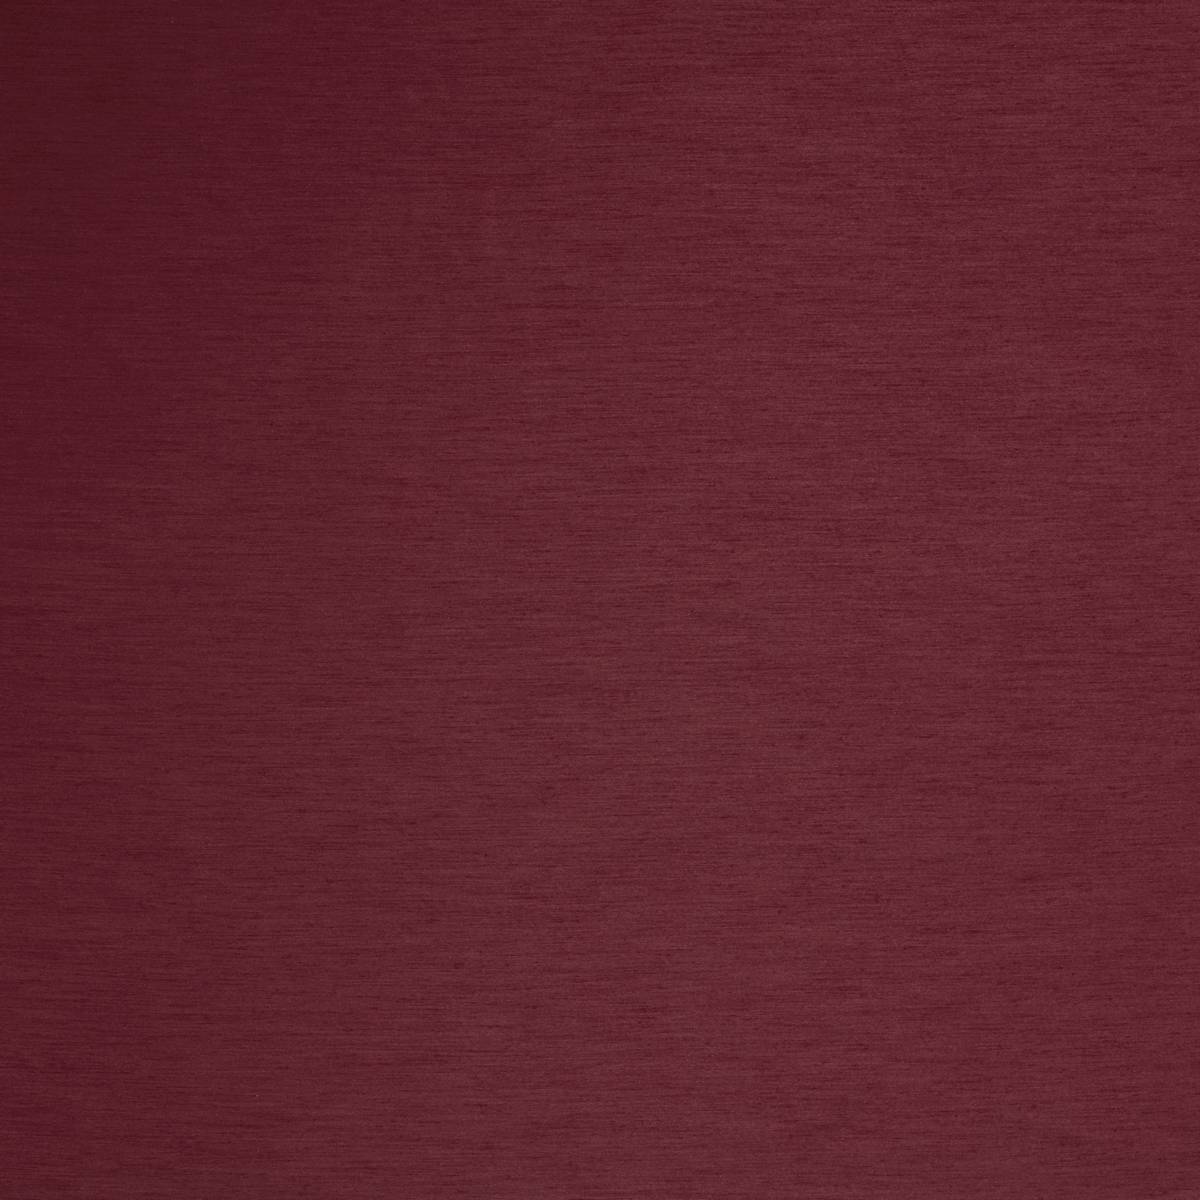 Alberry Merlot Fabric by iLiv